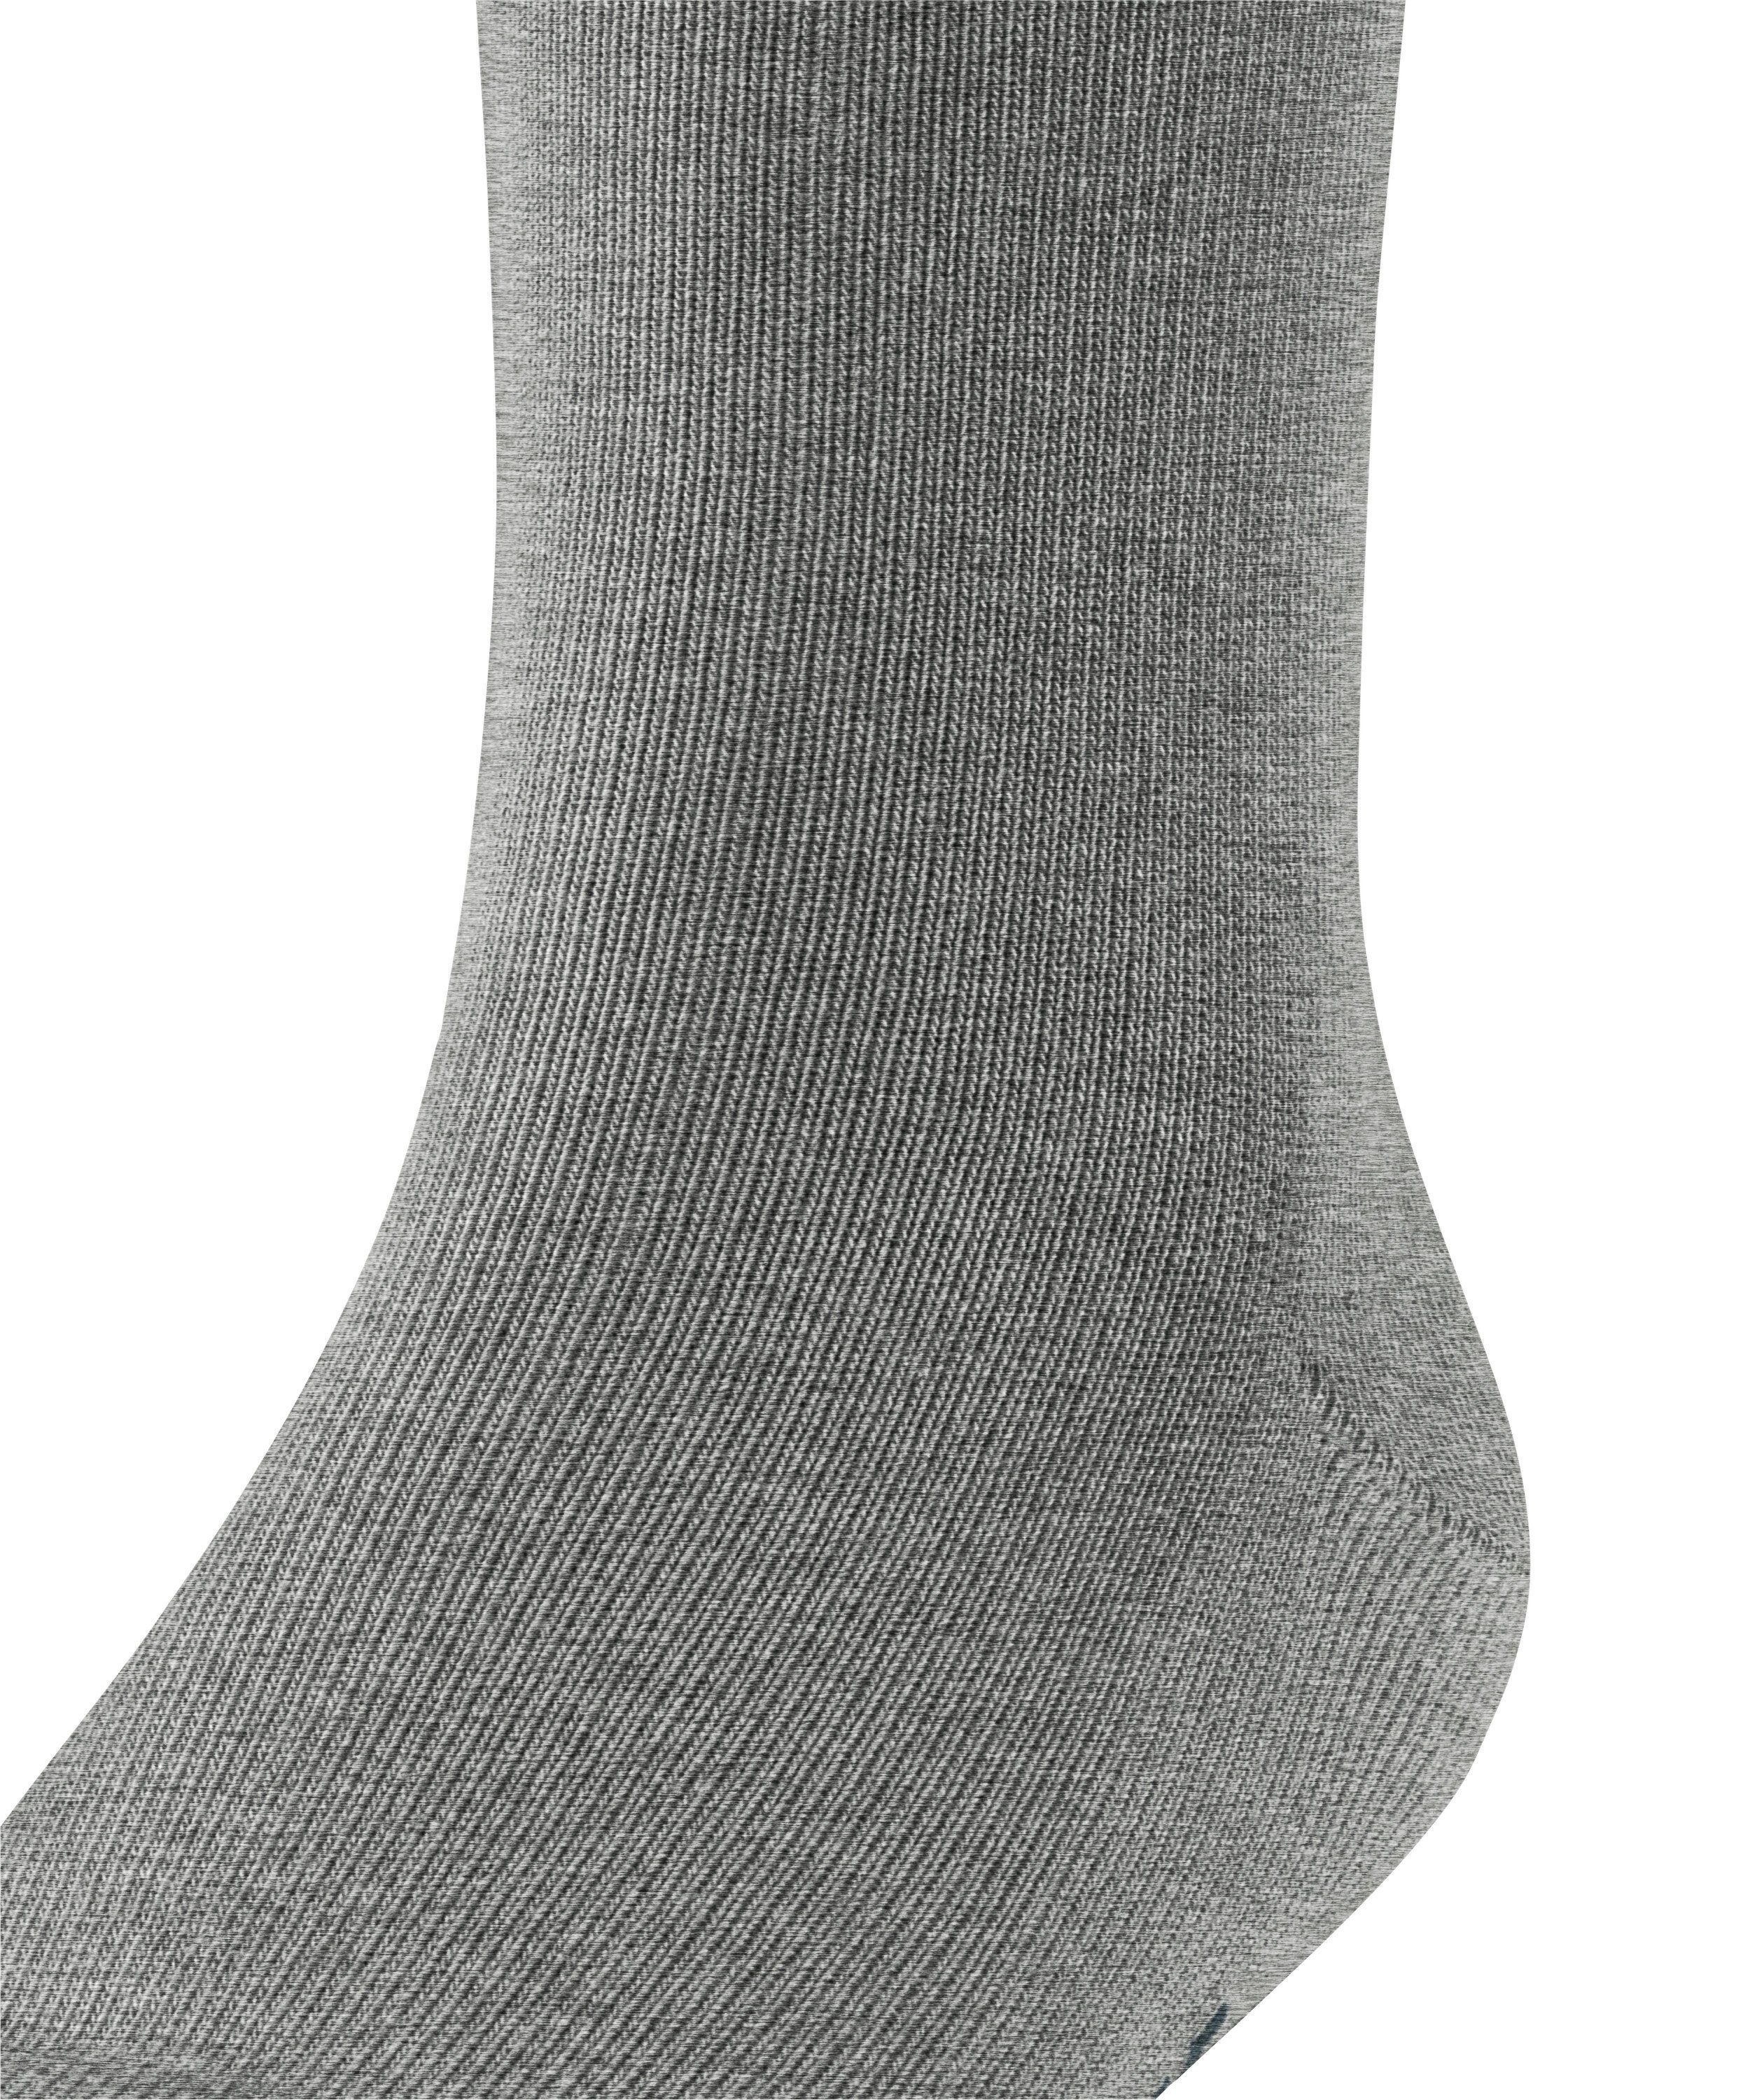 FALKE light Socken (3400) grey Family (1-Paar)